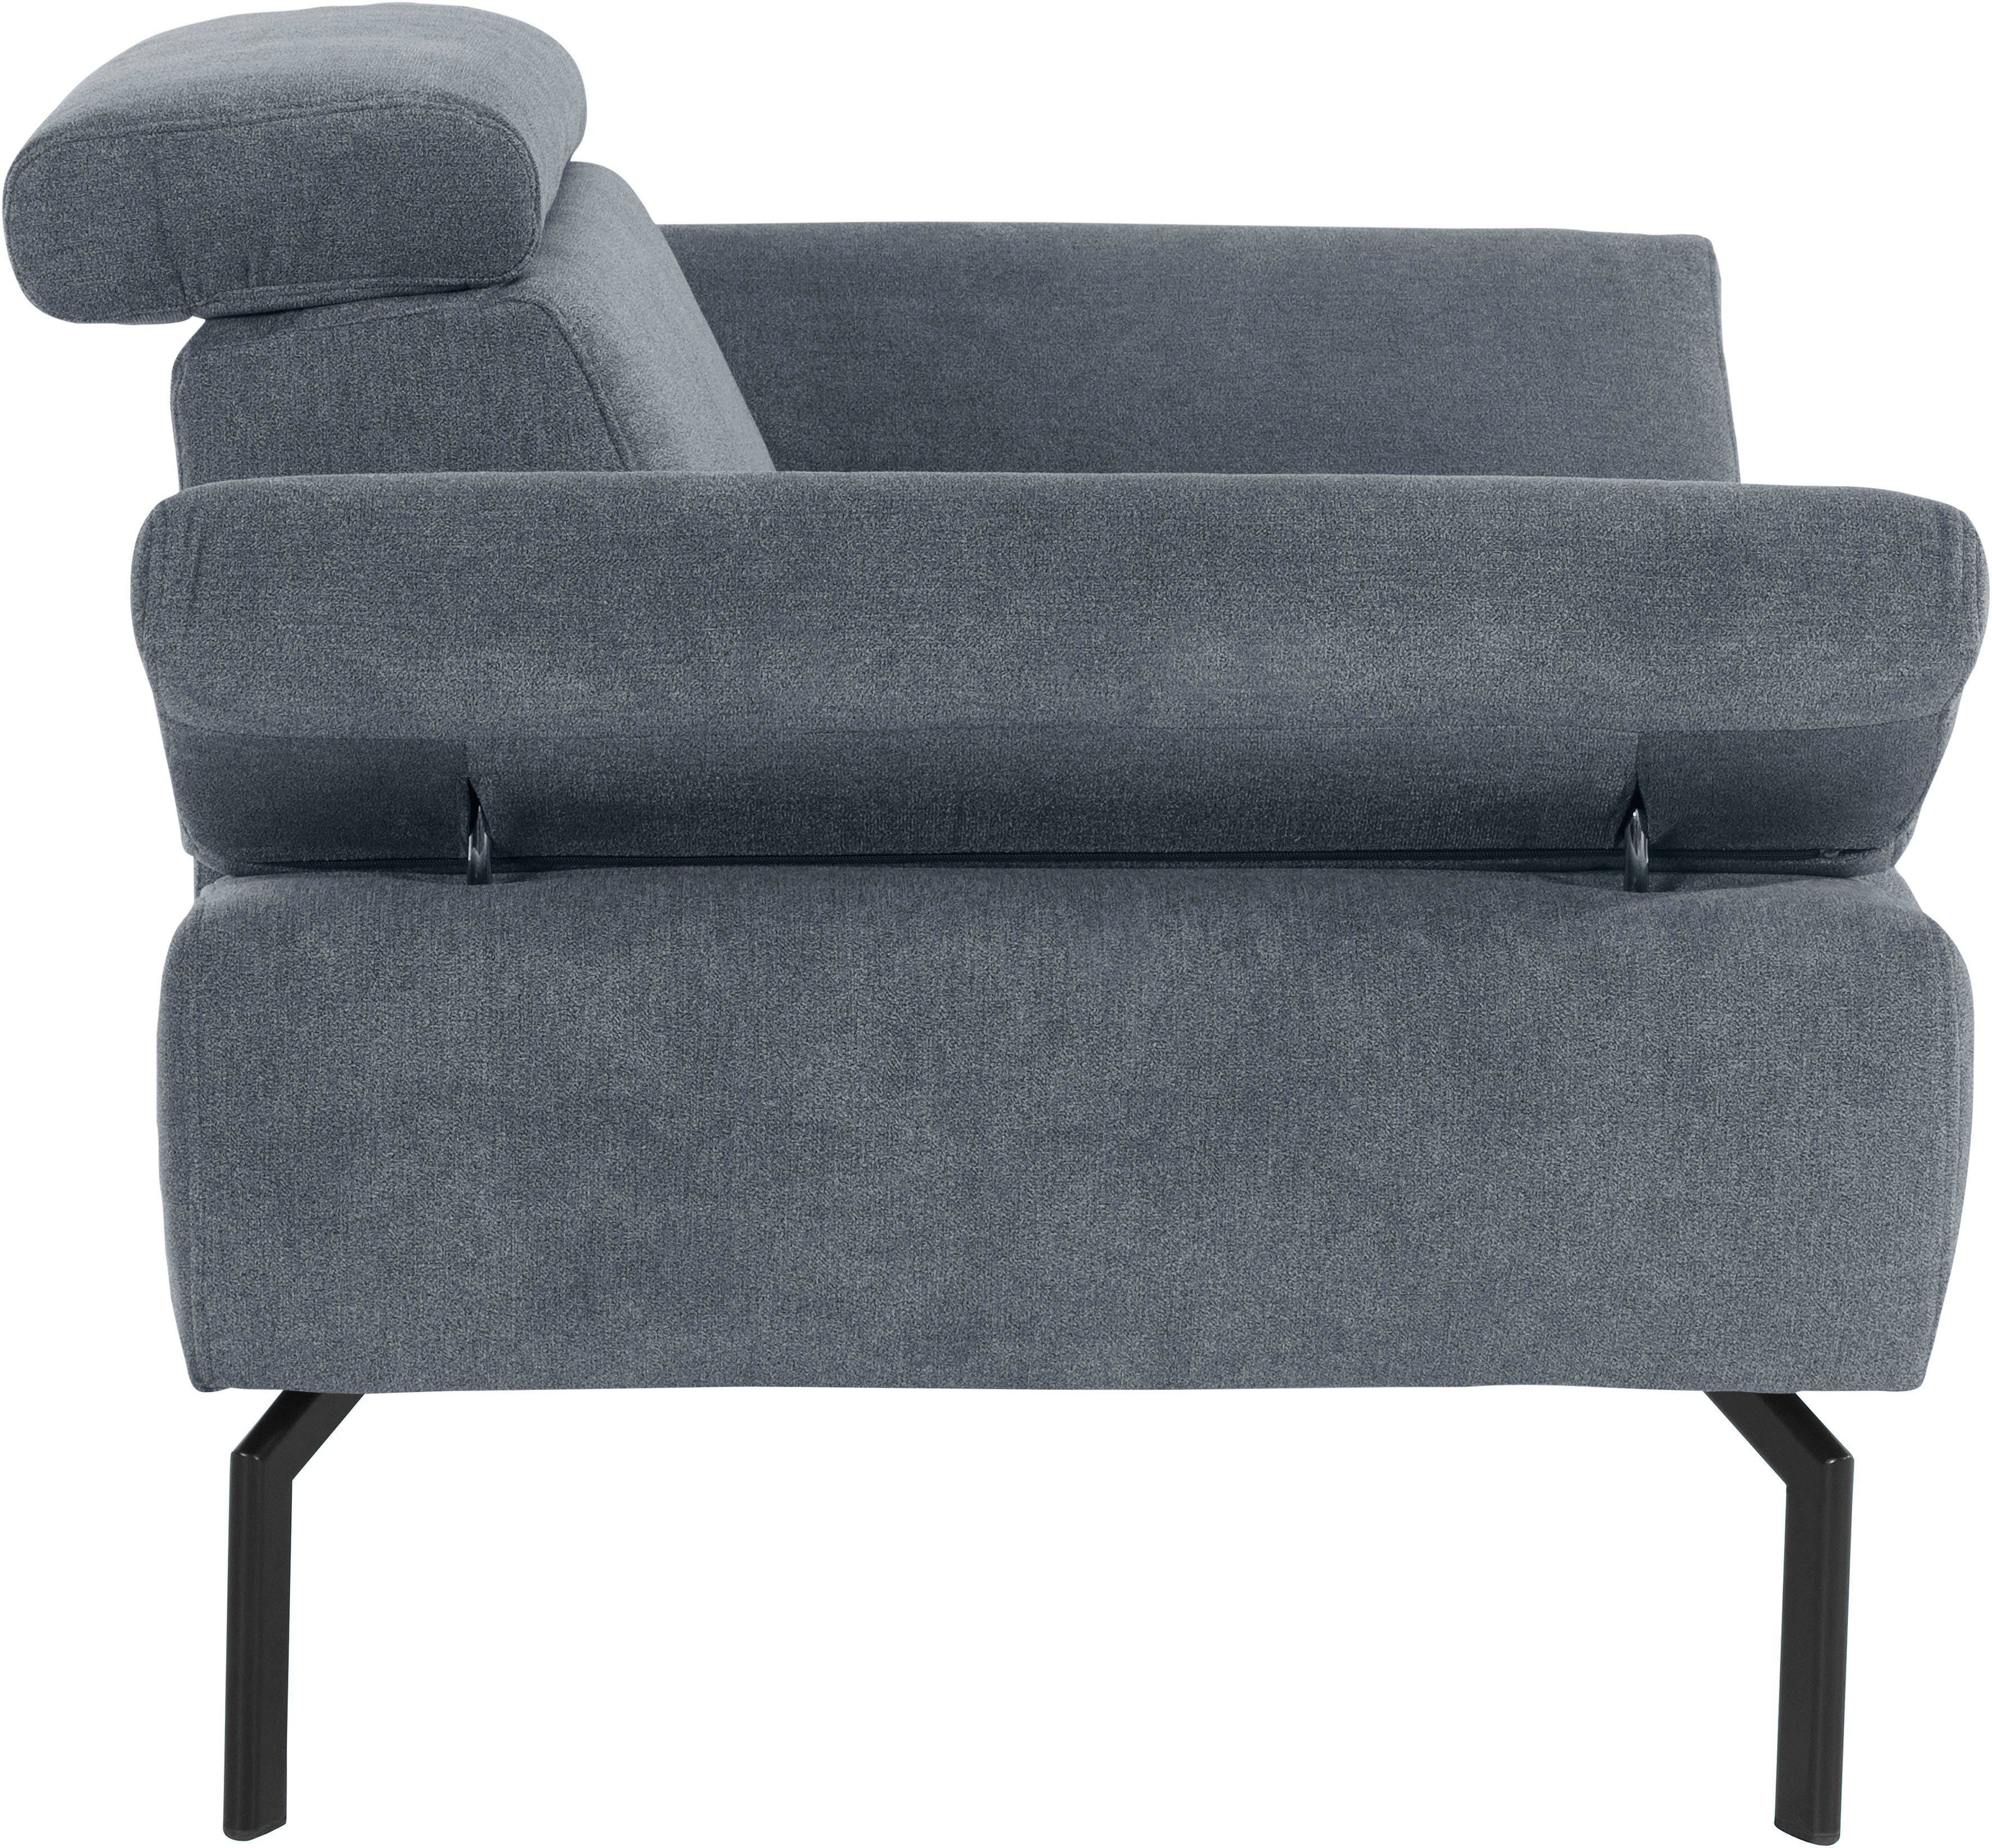 Places of Style Sessel Trapino in Luxus, Lederoptik Luxus-Microfaser Rückenverstellung, mit wahlweise